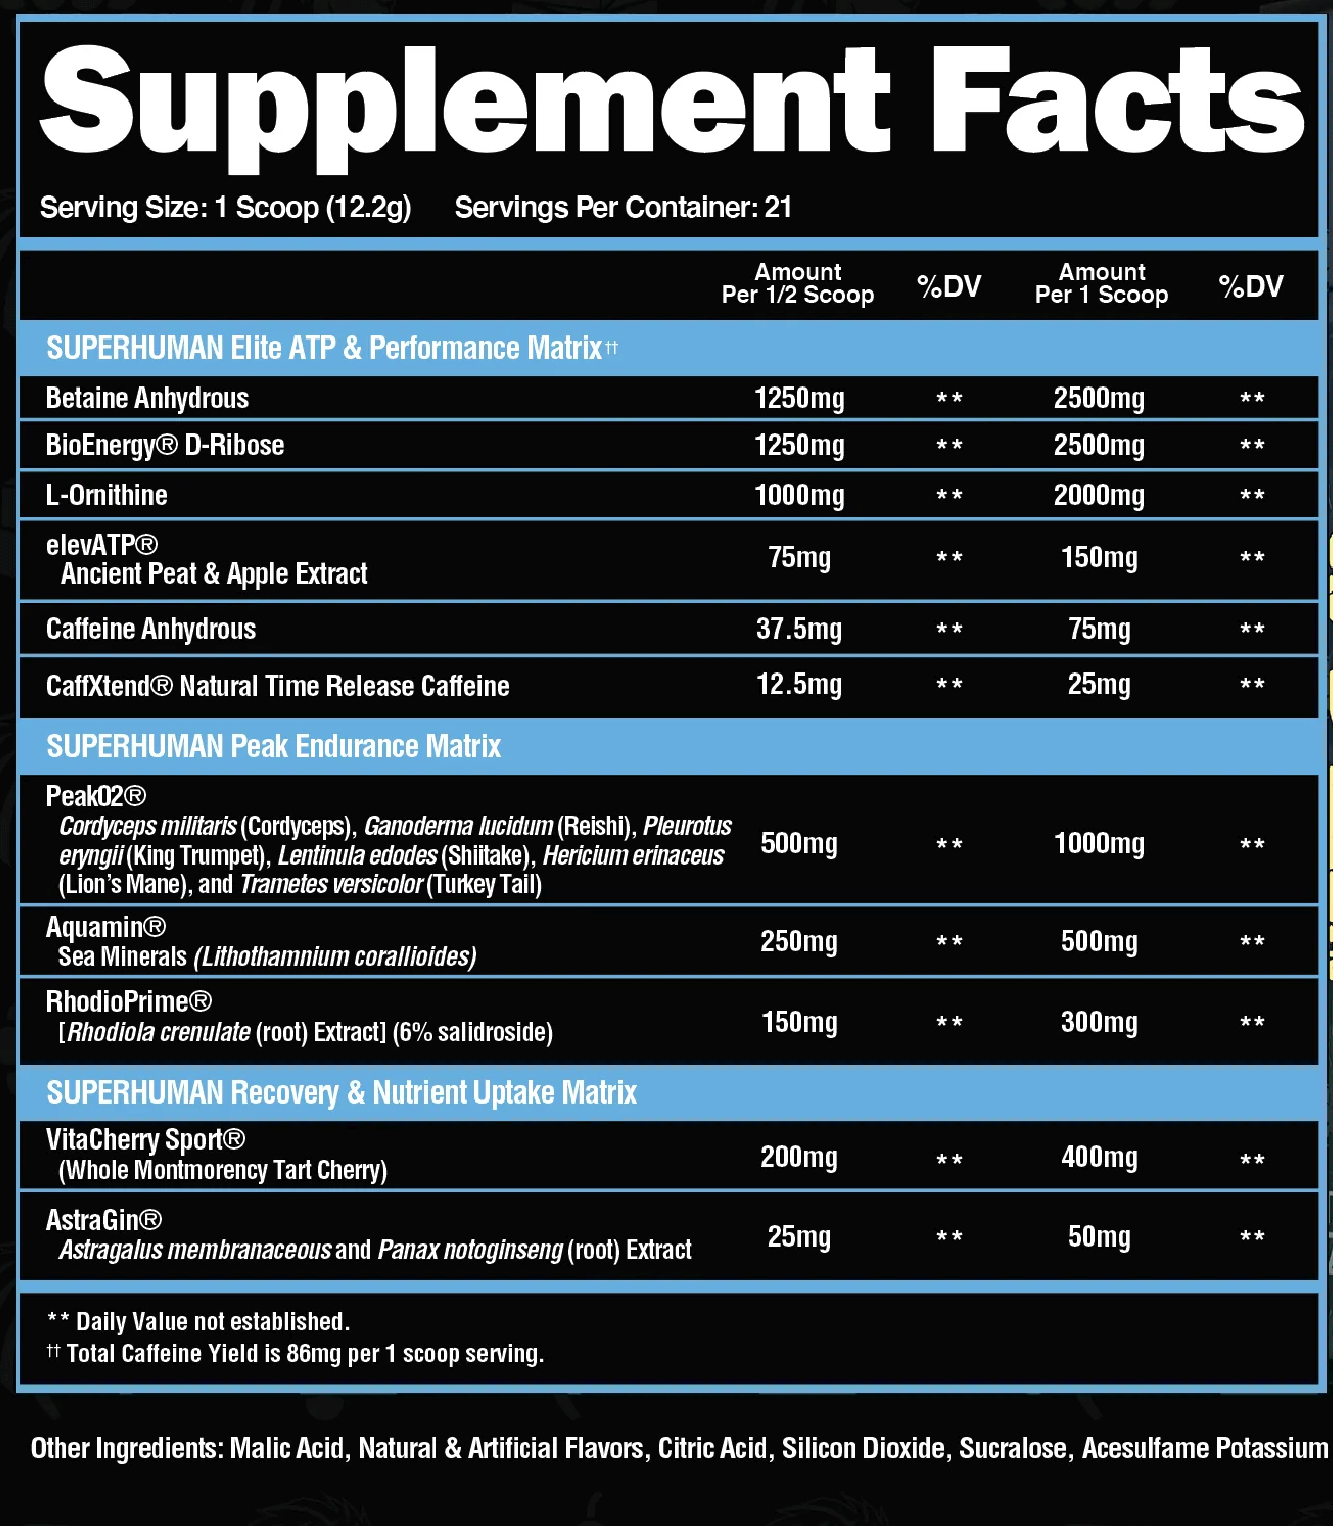 Supplement facts sheet featuring Superhuman Elite ATP, Performance Matrix, Peak Endurance Matrix, and Recovery & Nutrient Uptake Matrix ingredients and servings.